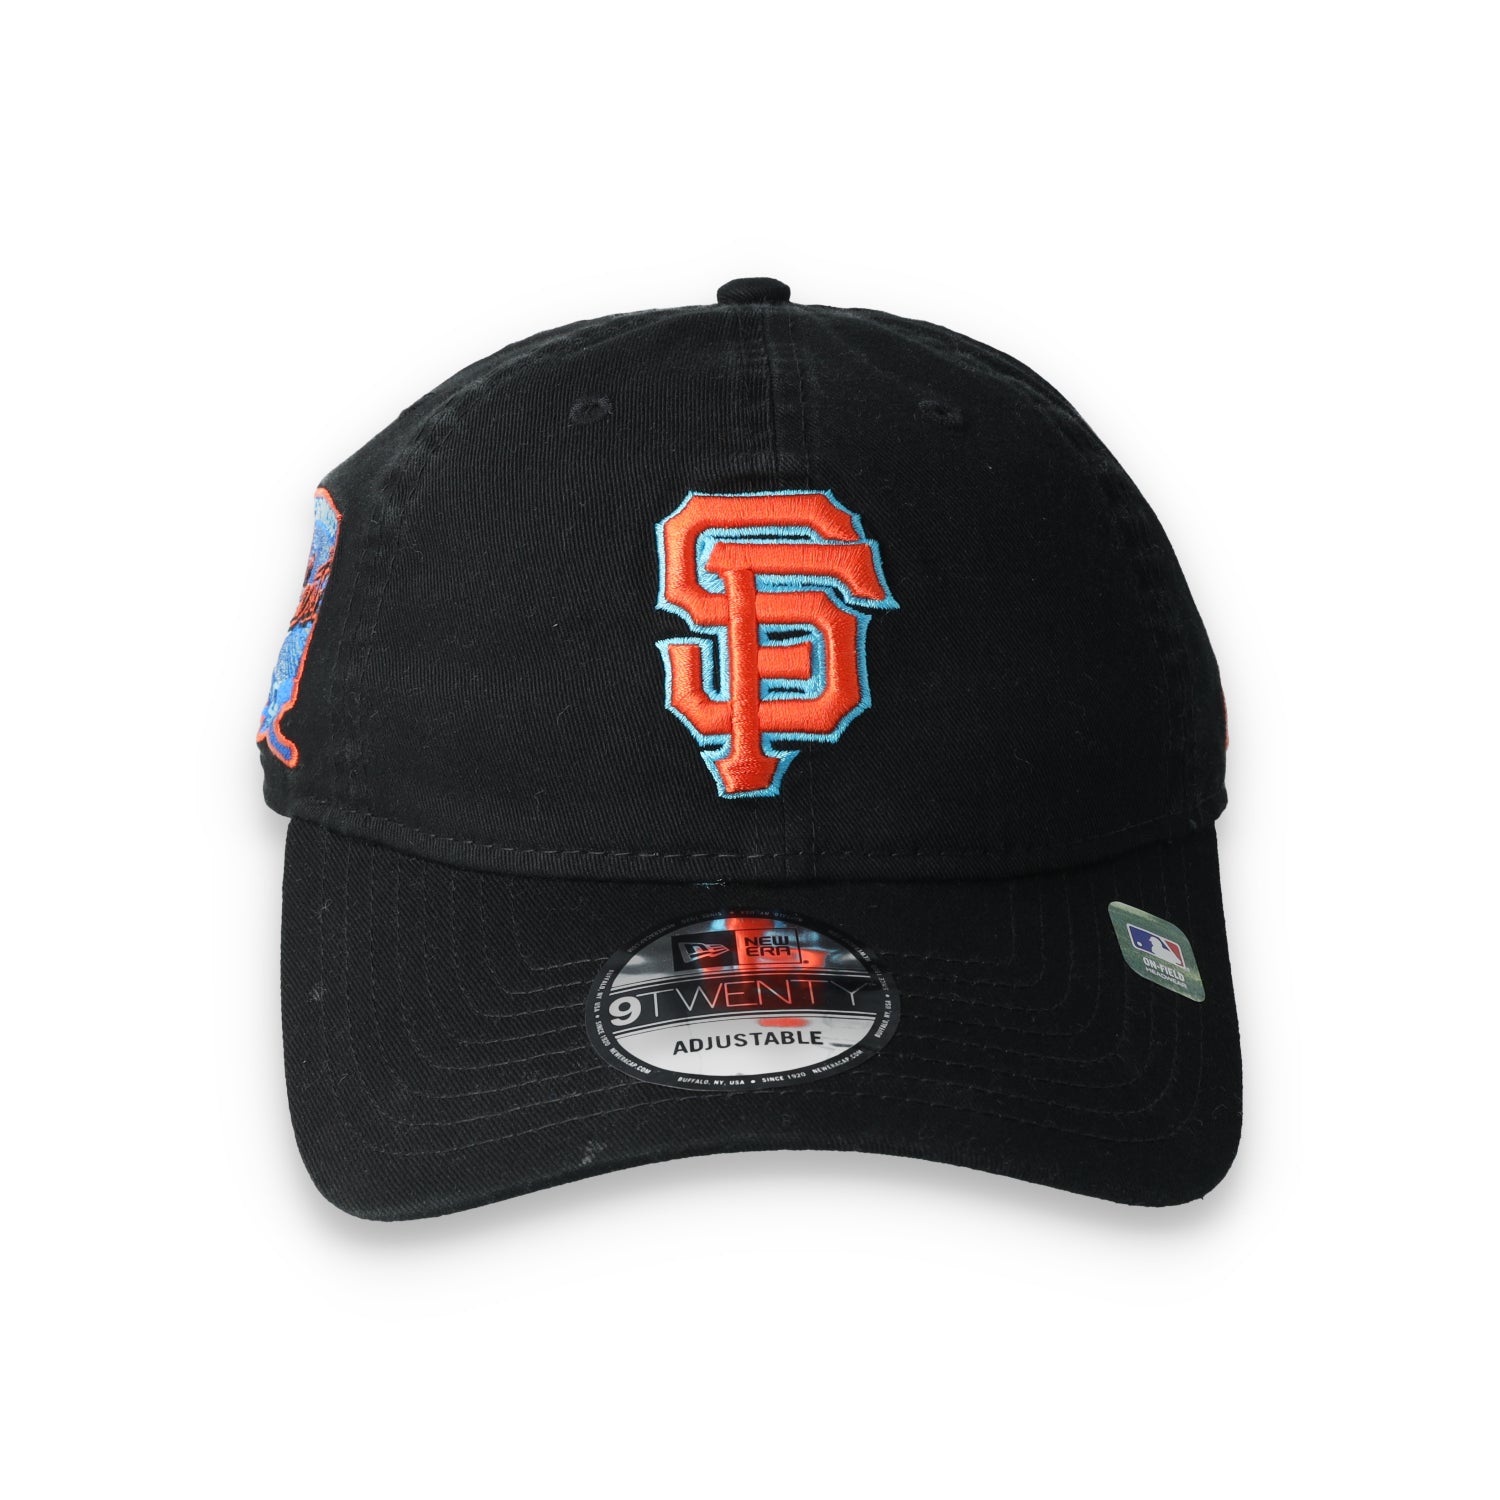 New Era San Francisco Giants Fathers Day 9TWENTY Adjustable Hat